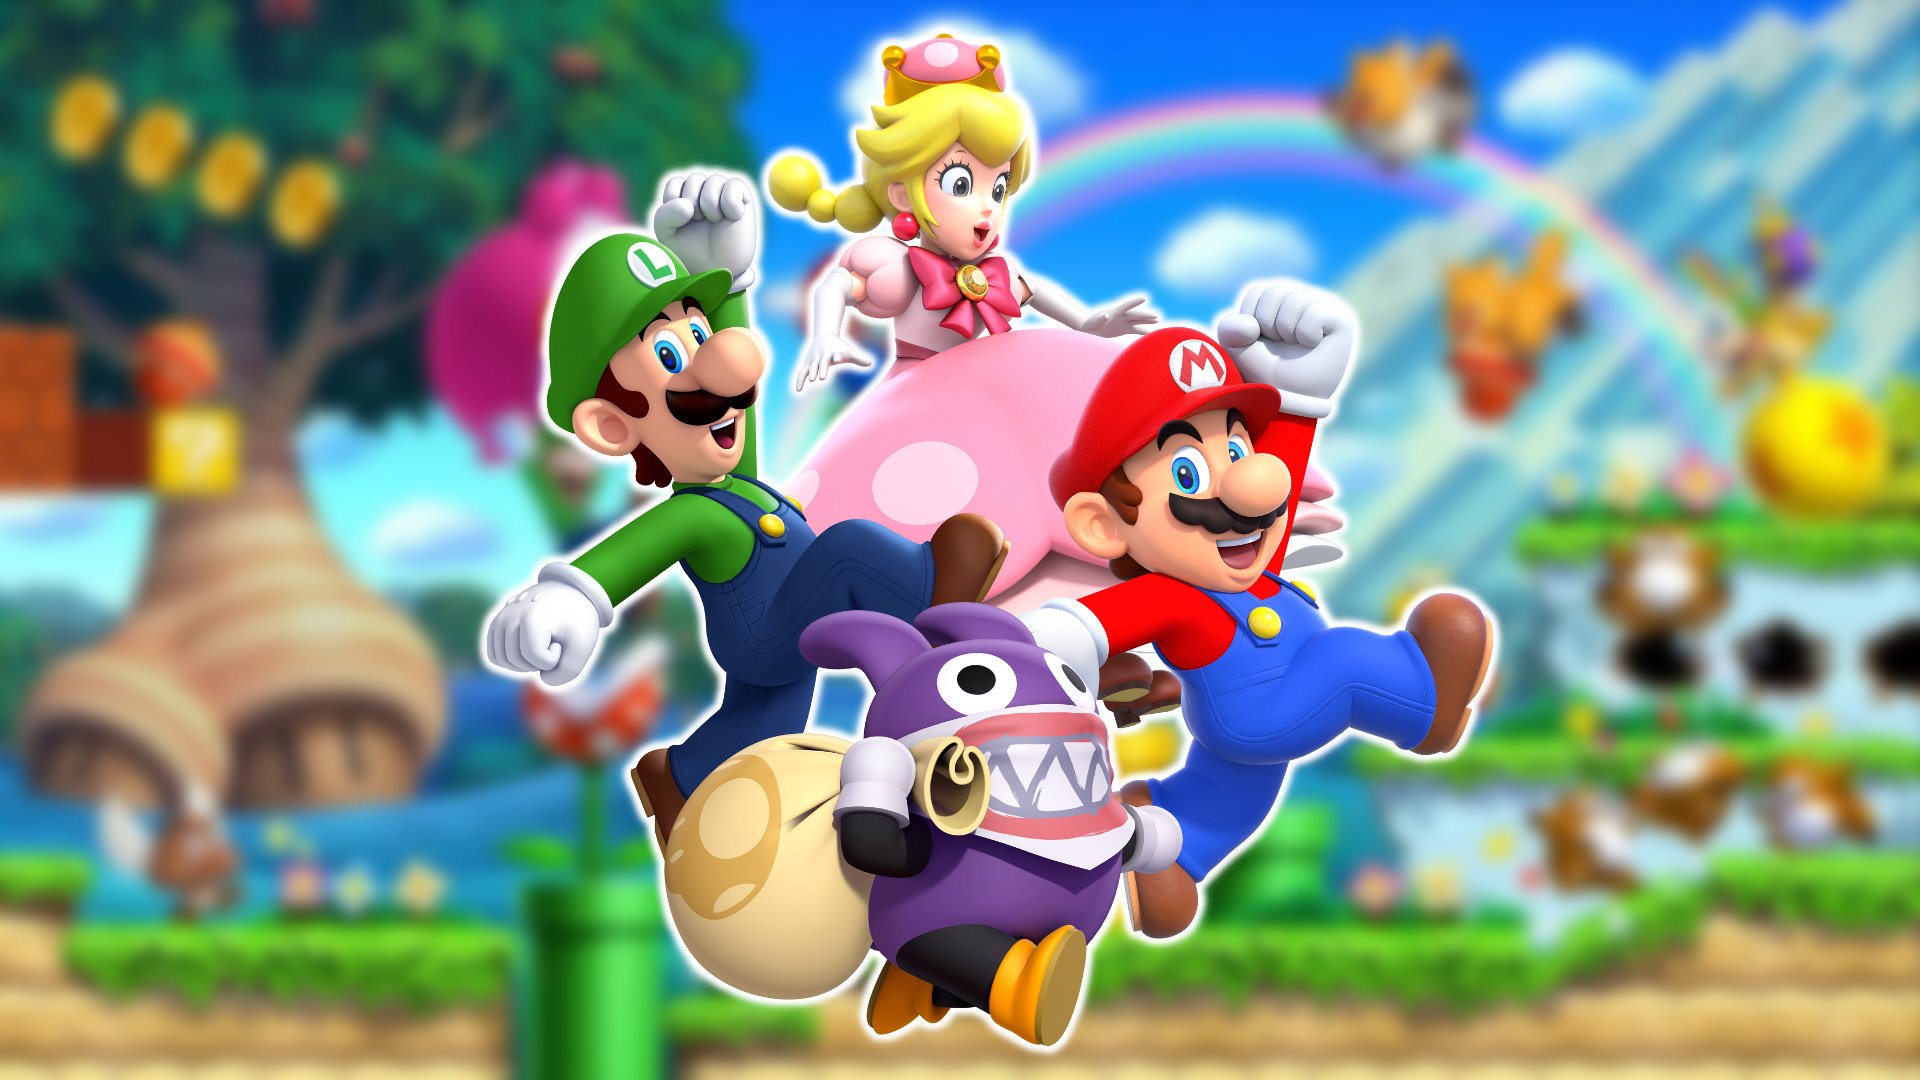 download the last version for ipod The Super Mario Bros